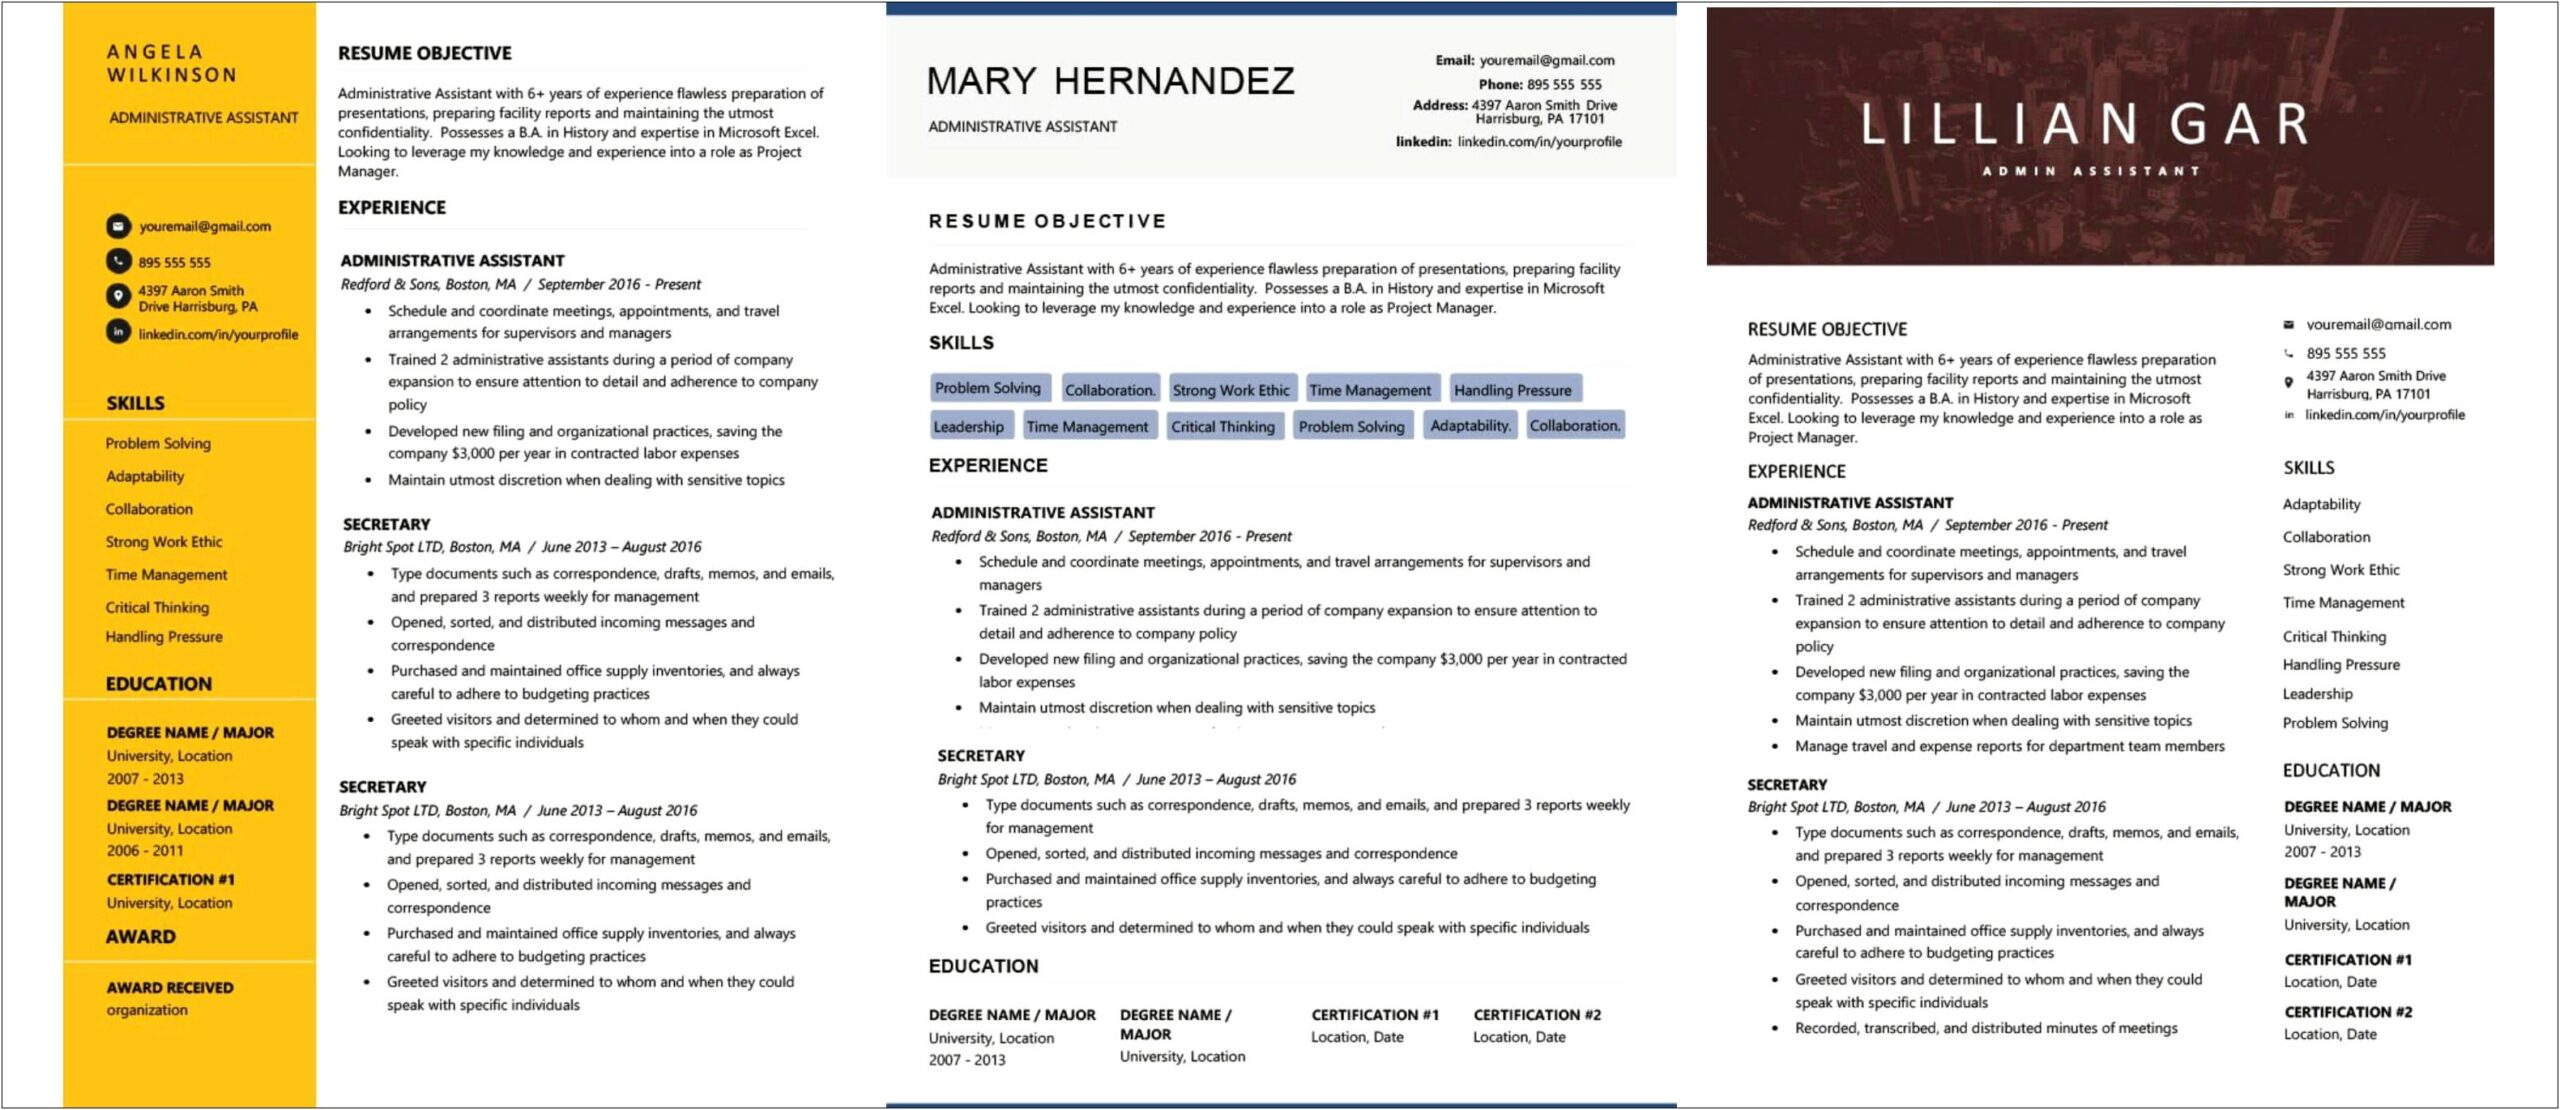 Resume Description Of Company Before Title